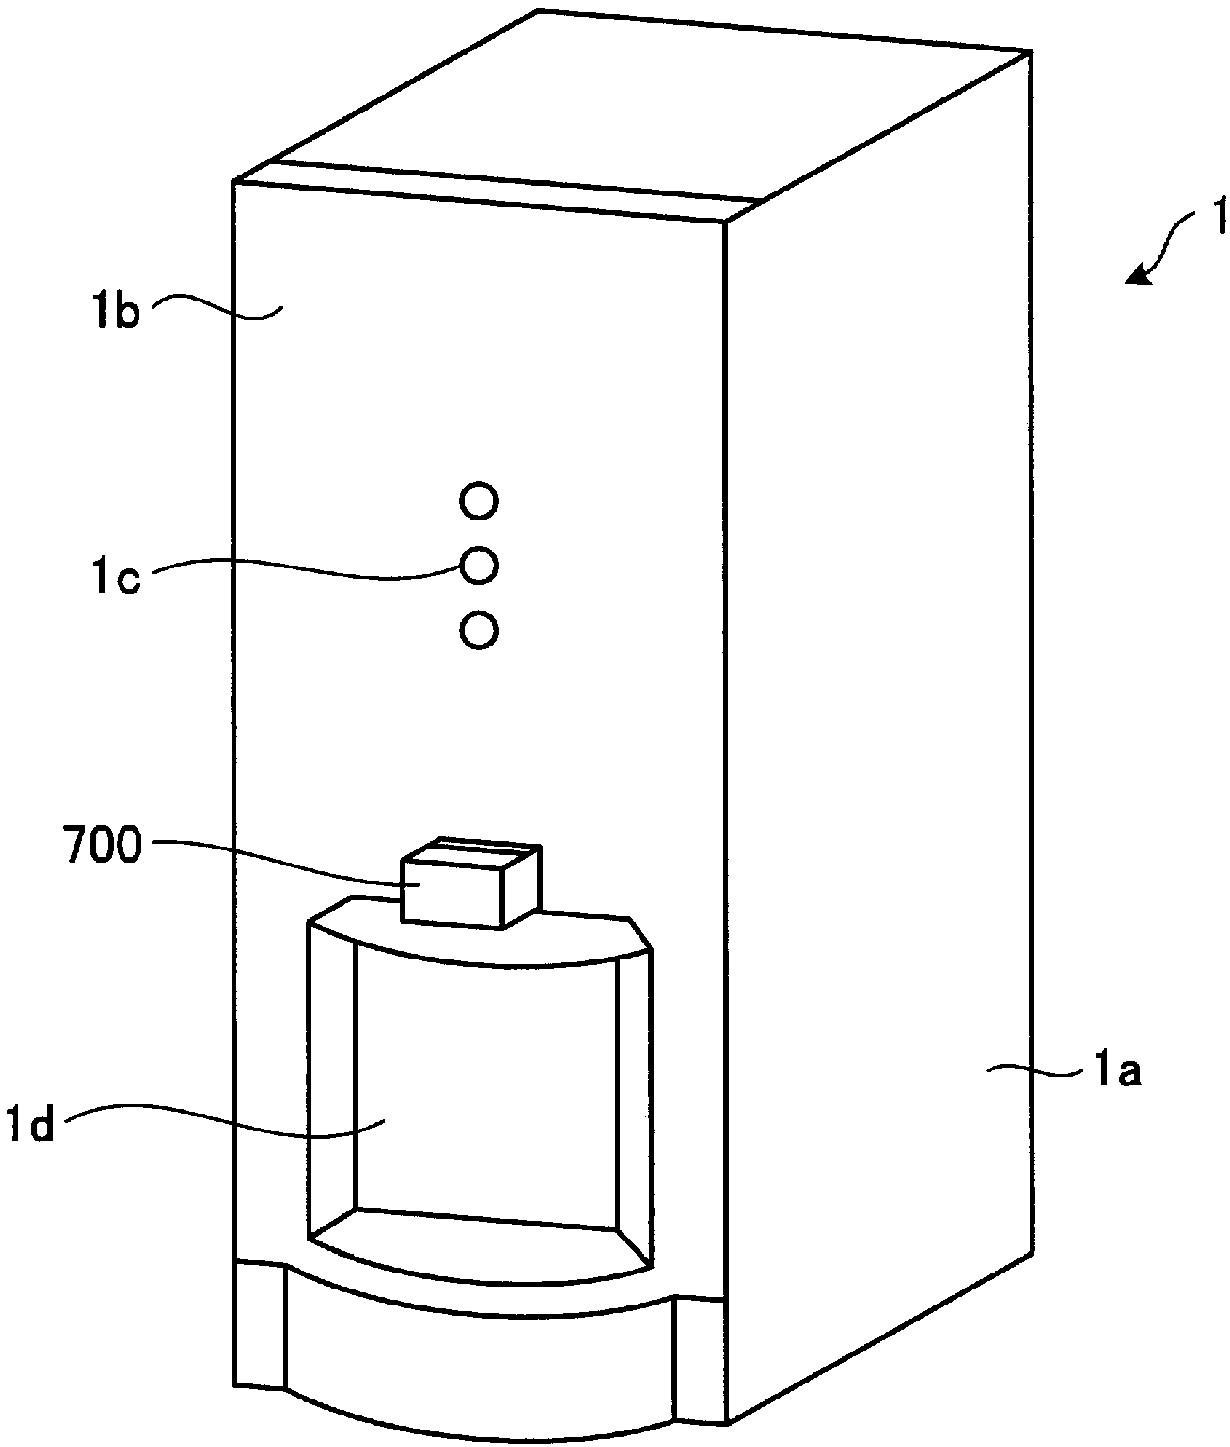 Method for dispensing milk-containing beverage and beverage dispenser using same